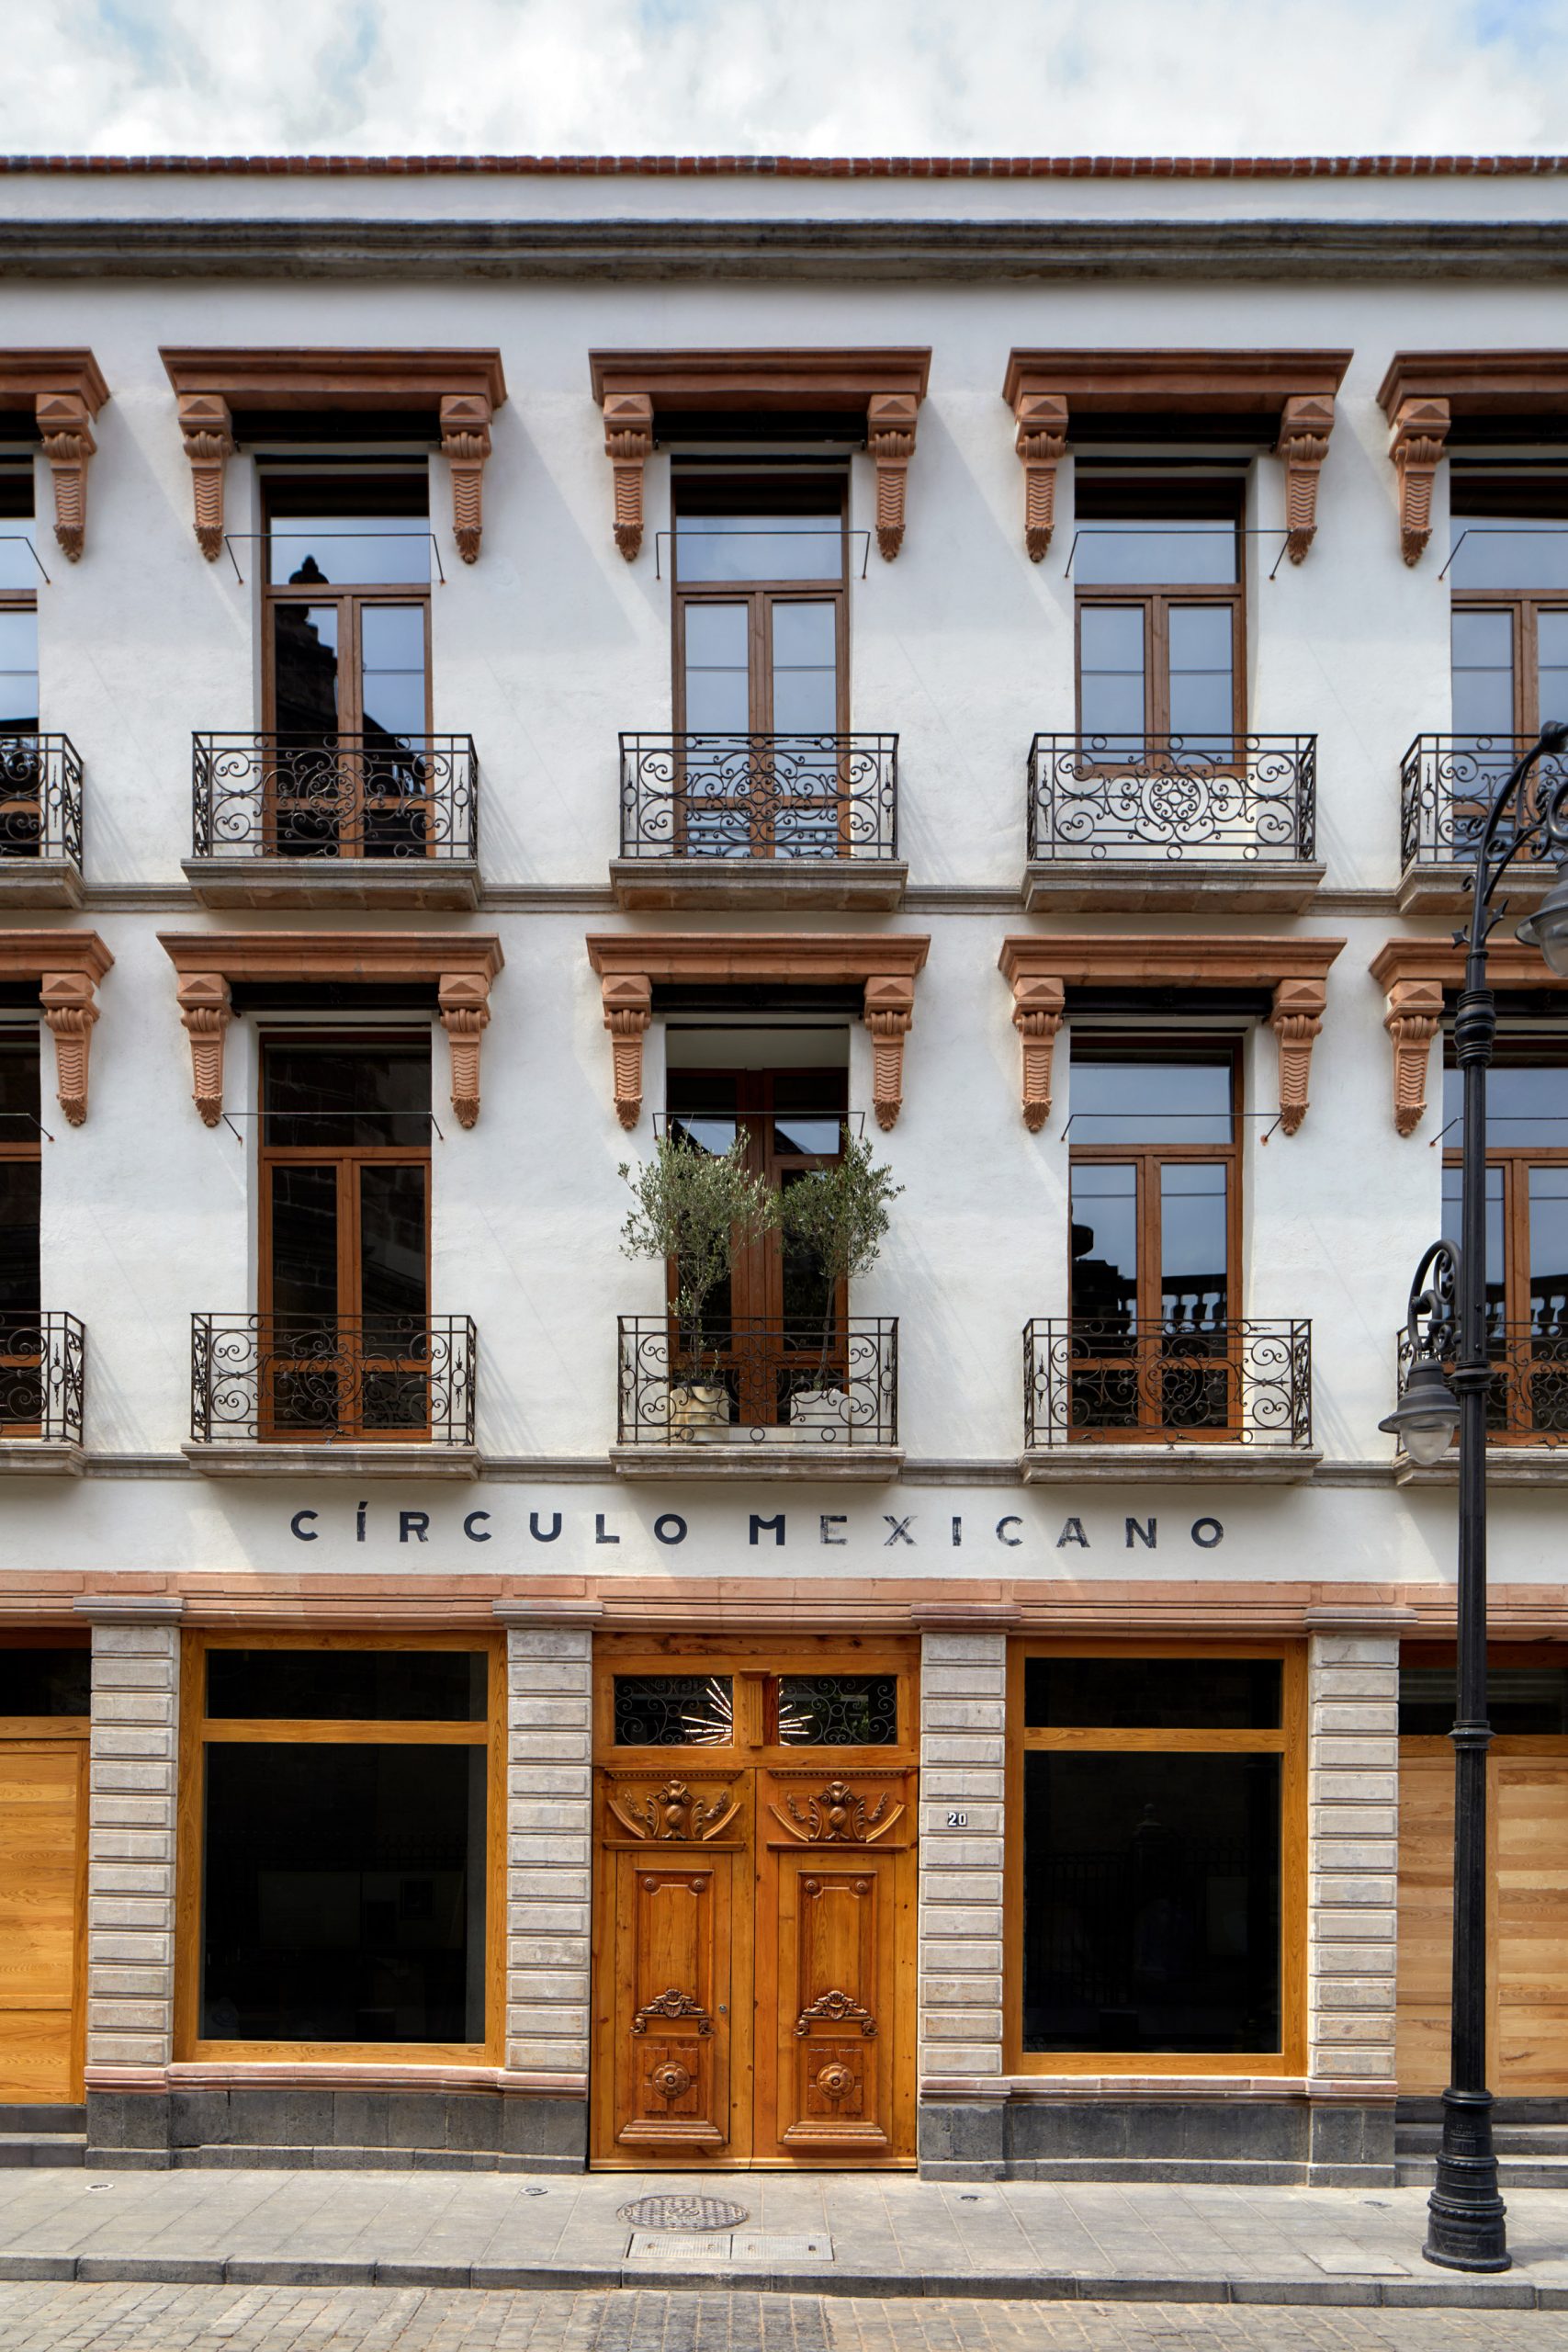 Exterior of Circulo Mexicano hotel in Mexico City by Ambrosi Etchegaray